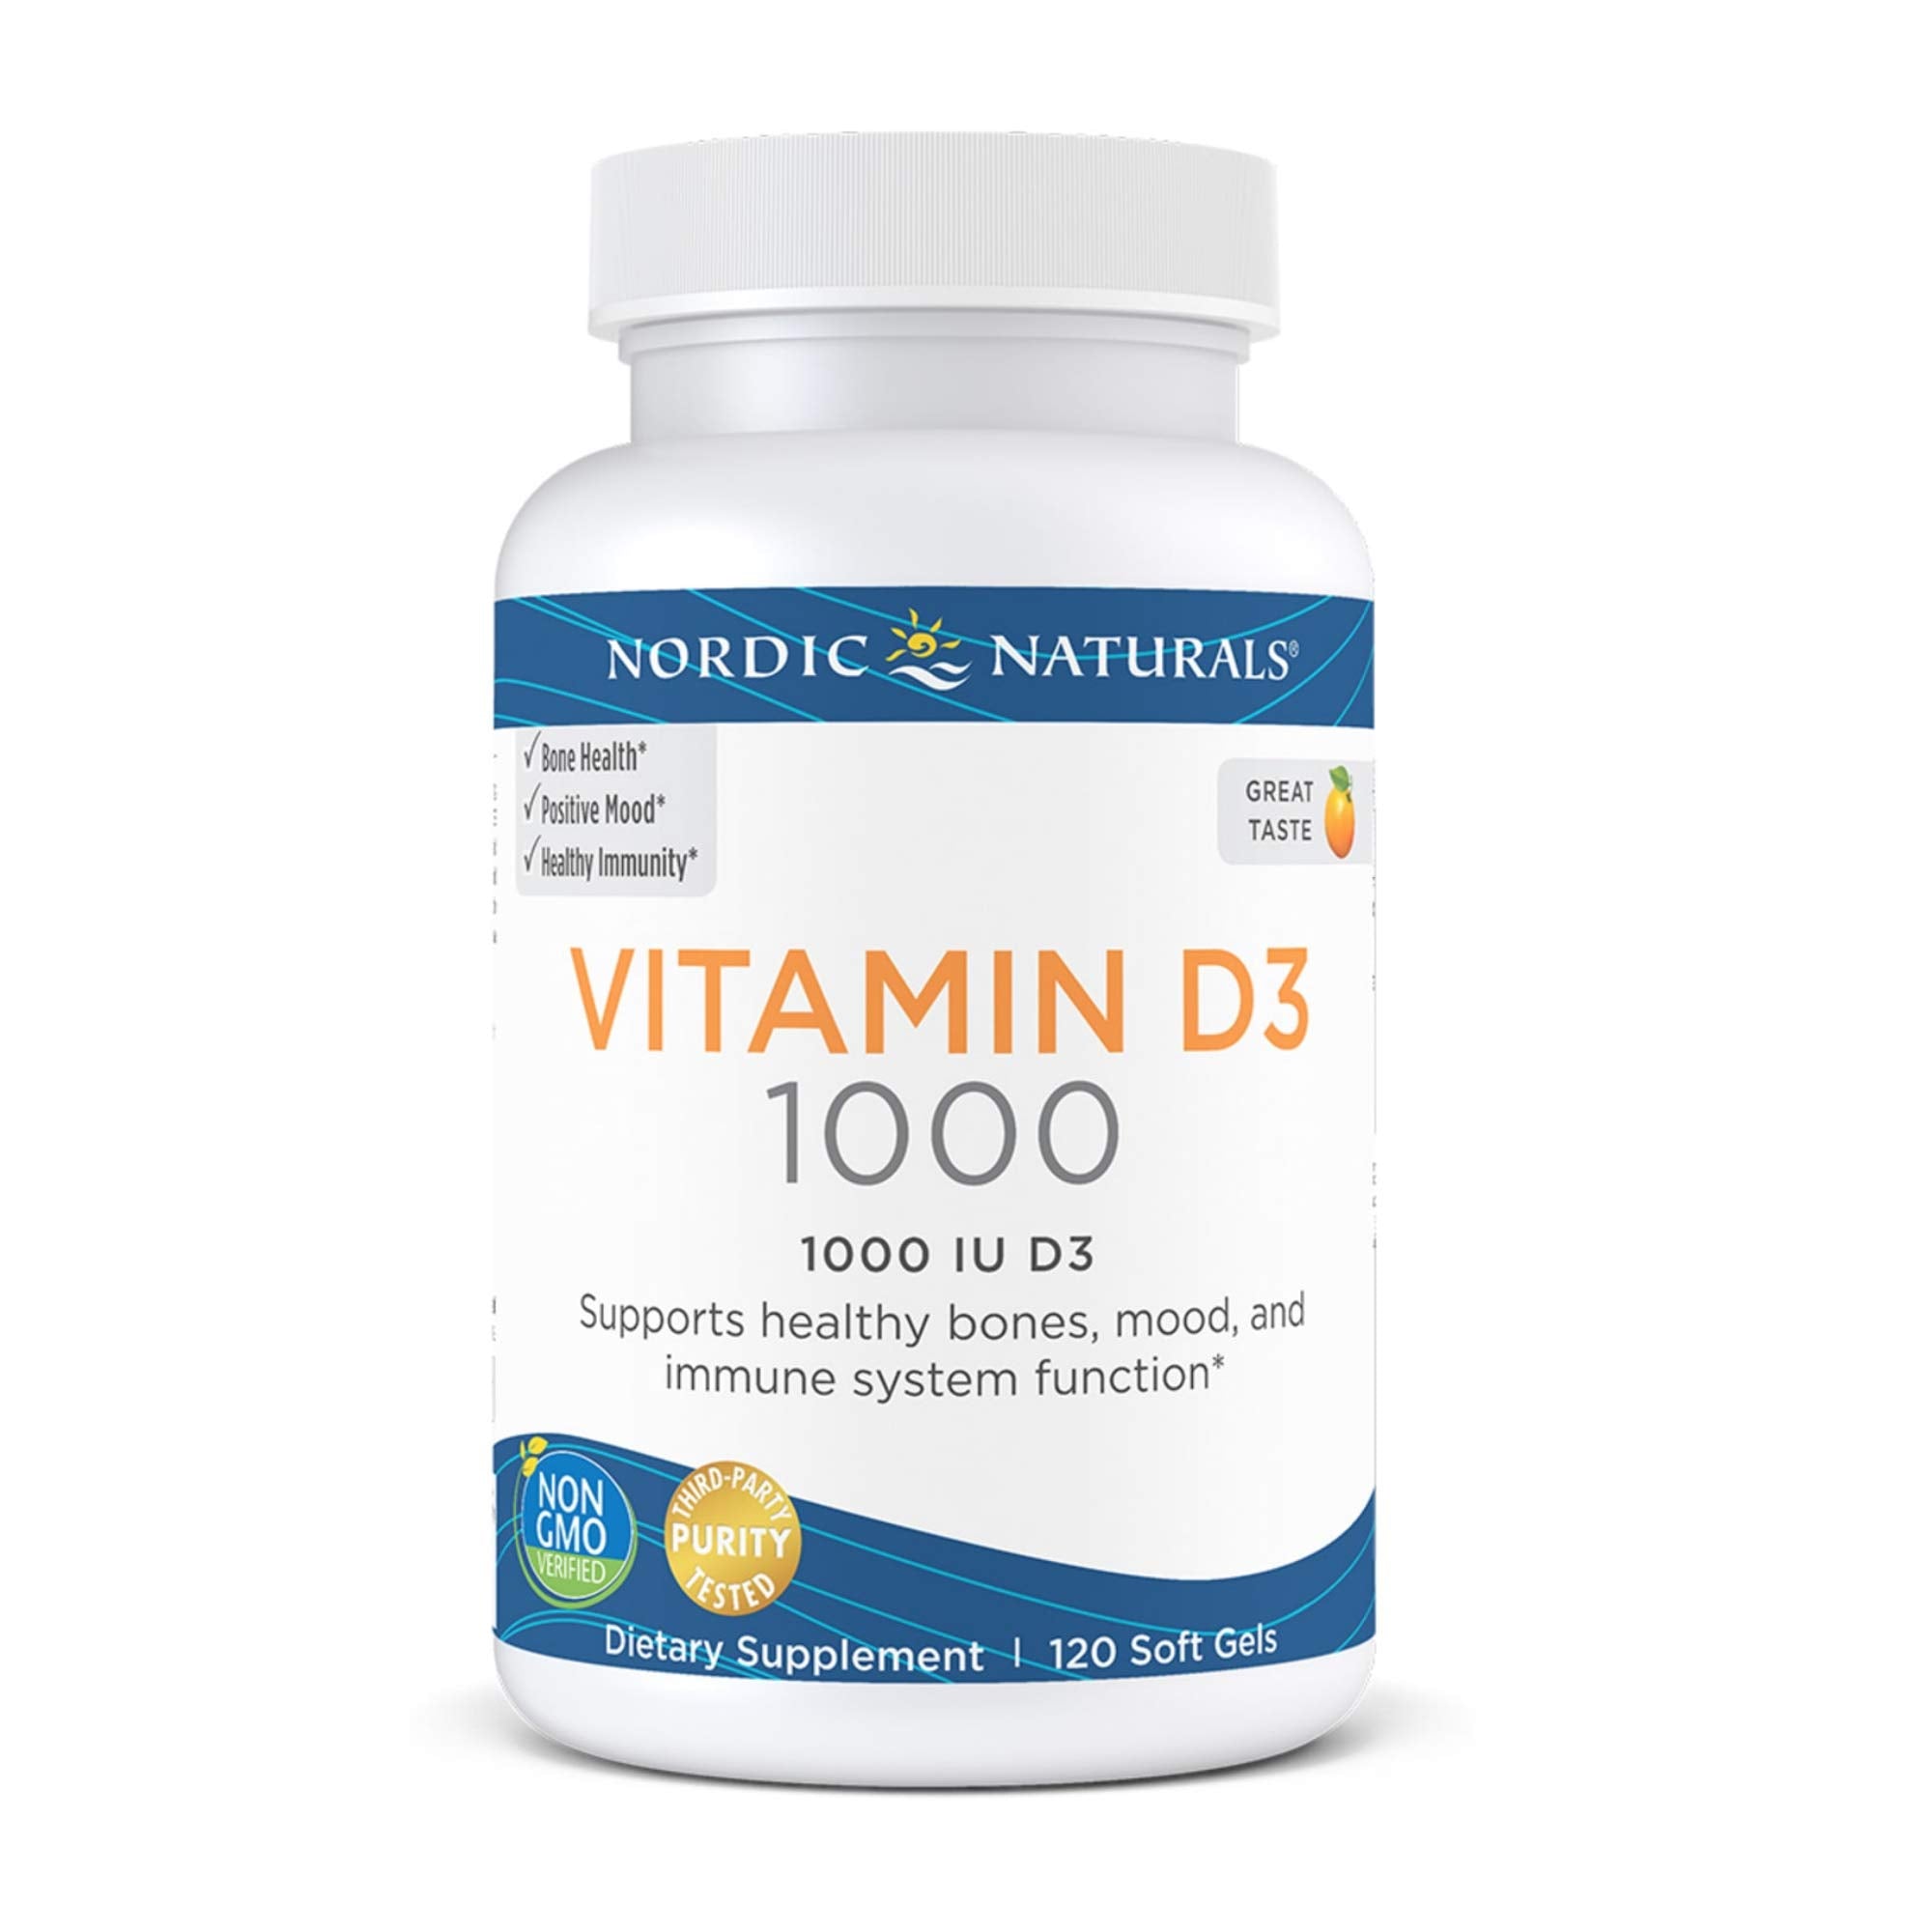 Nordic Naturals Vitamin D3 1000, Orange - 1000 IU Vitamin D3-120 Mini Soft Gels - Supports Healthy Bones, Mood & Immune System Function - Non-GMO - 120 Servings